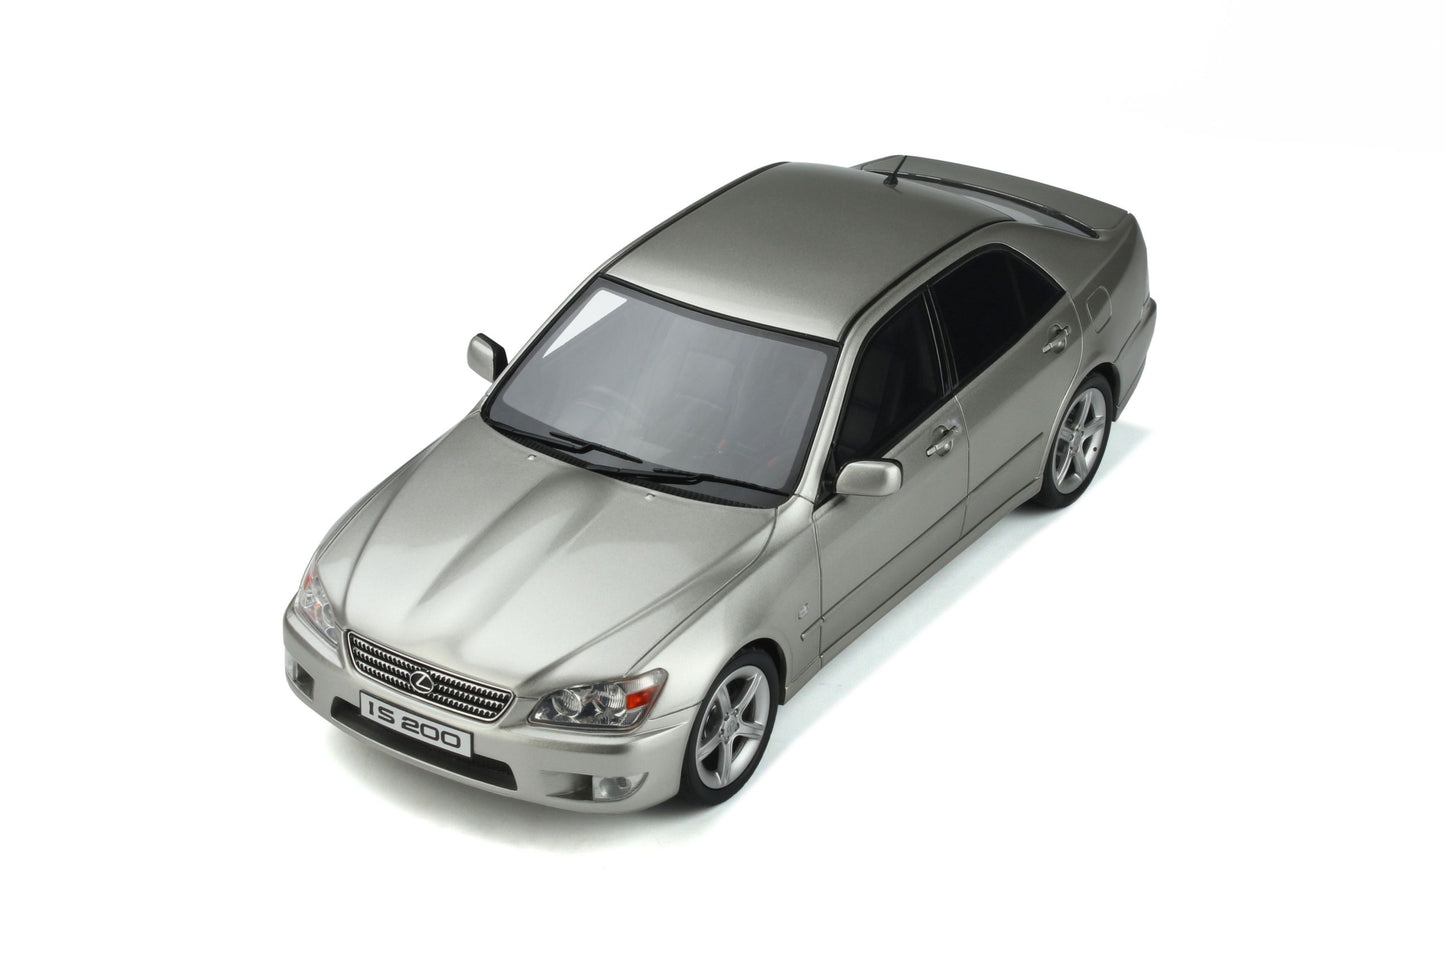 OttOmobile - Lexus IS200 (Millennium Silver Metallic) 1:18 Scale Model Car